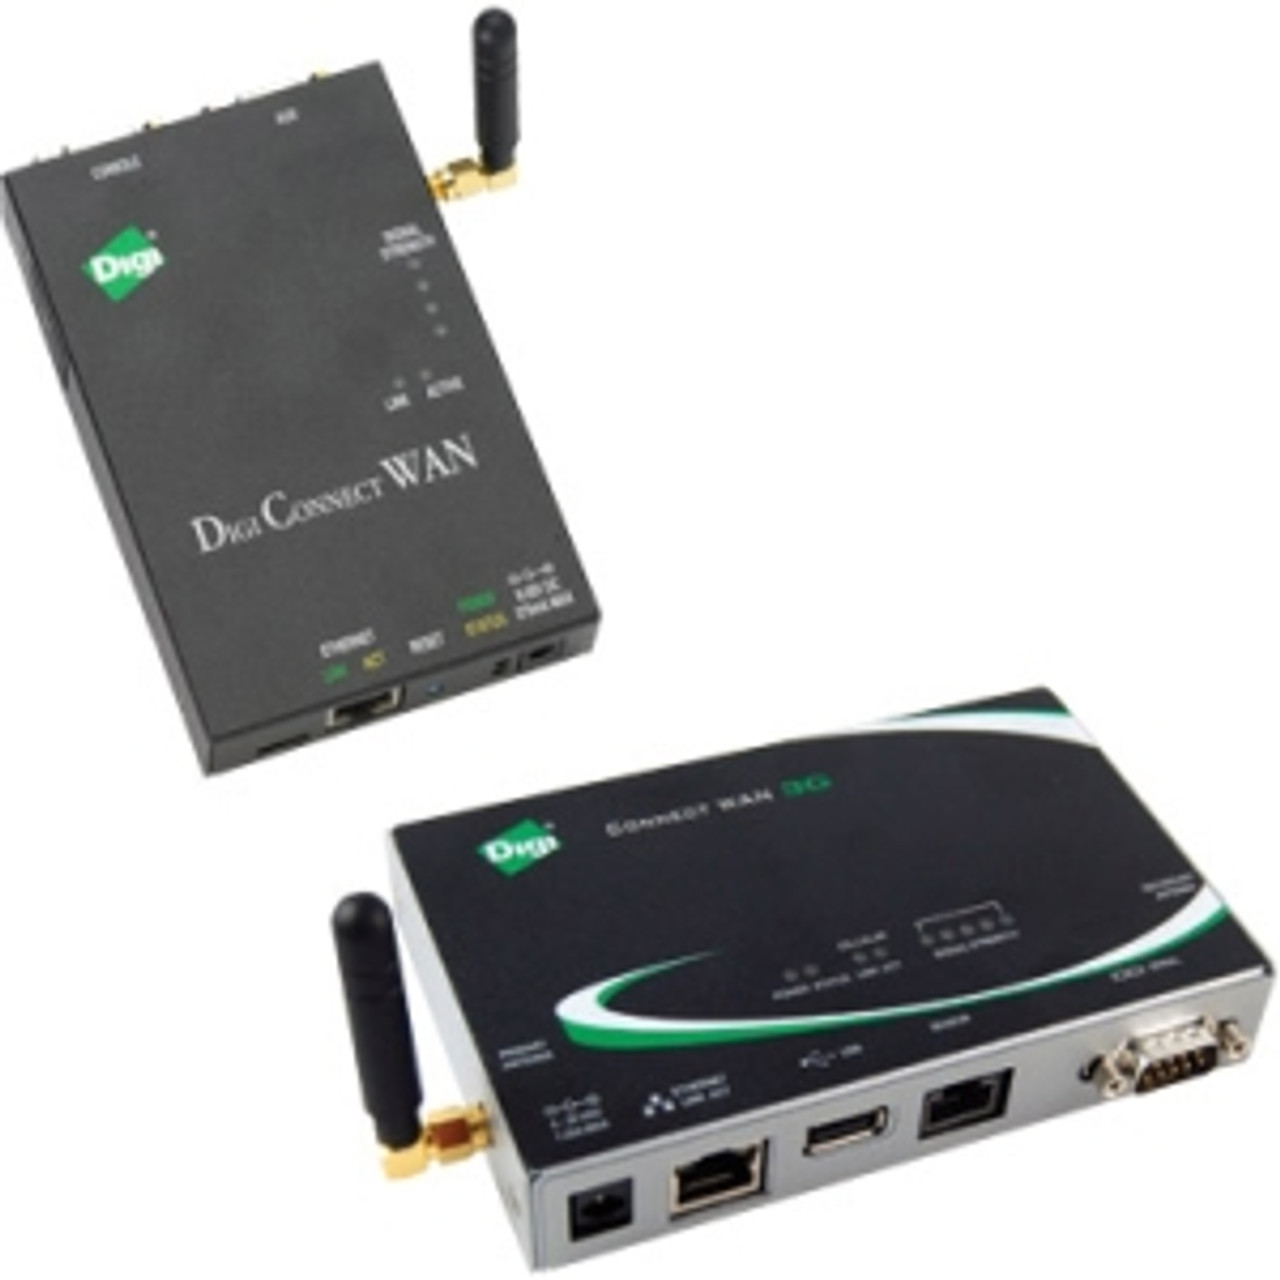 DC-WAN-U605 Digi Digi Connect Wireless Router 2 x Antenna 1 x Network Port Desktop, Rail-mountable (Refurbished)